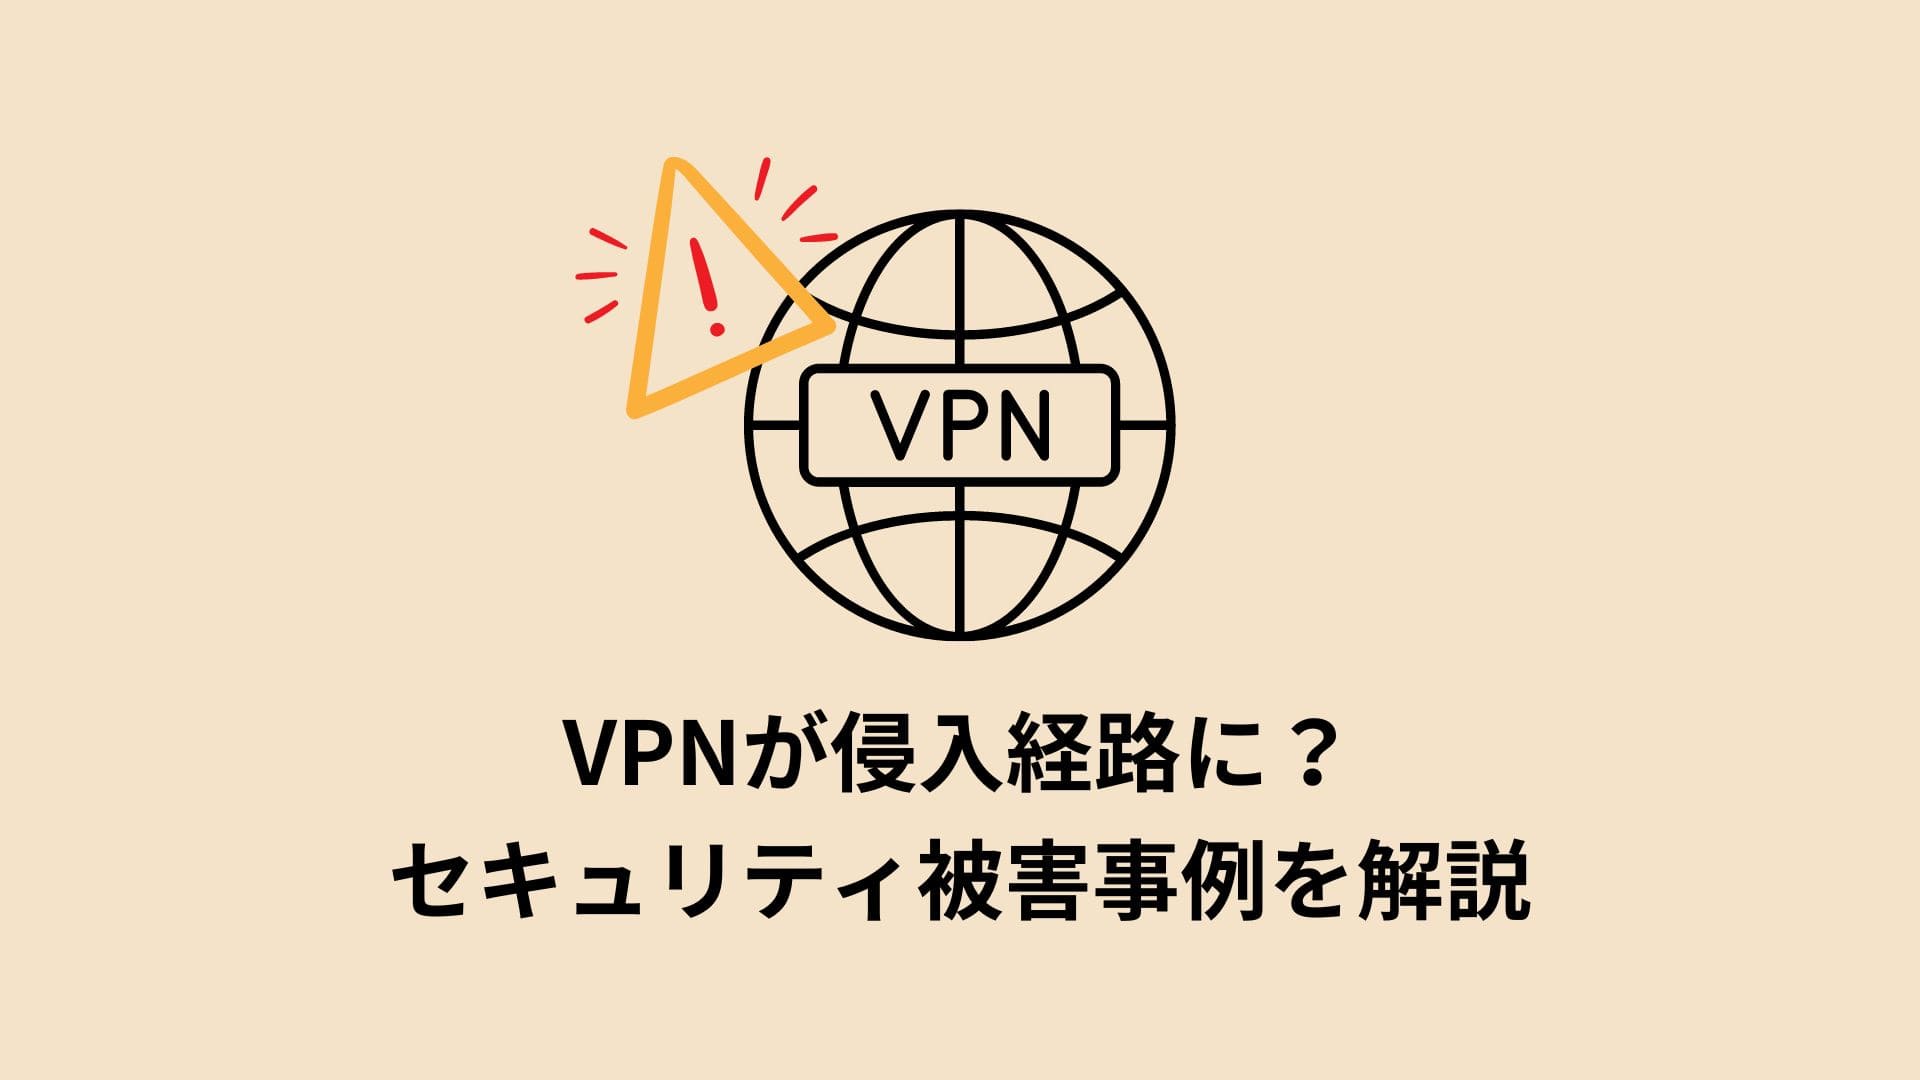 VPNが侵入経路に？セキュリティ被害事例を解説